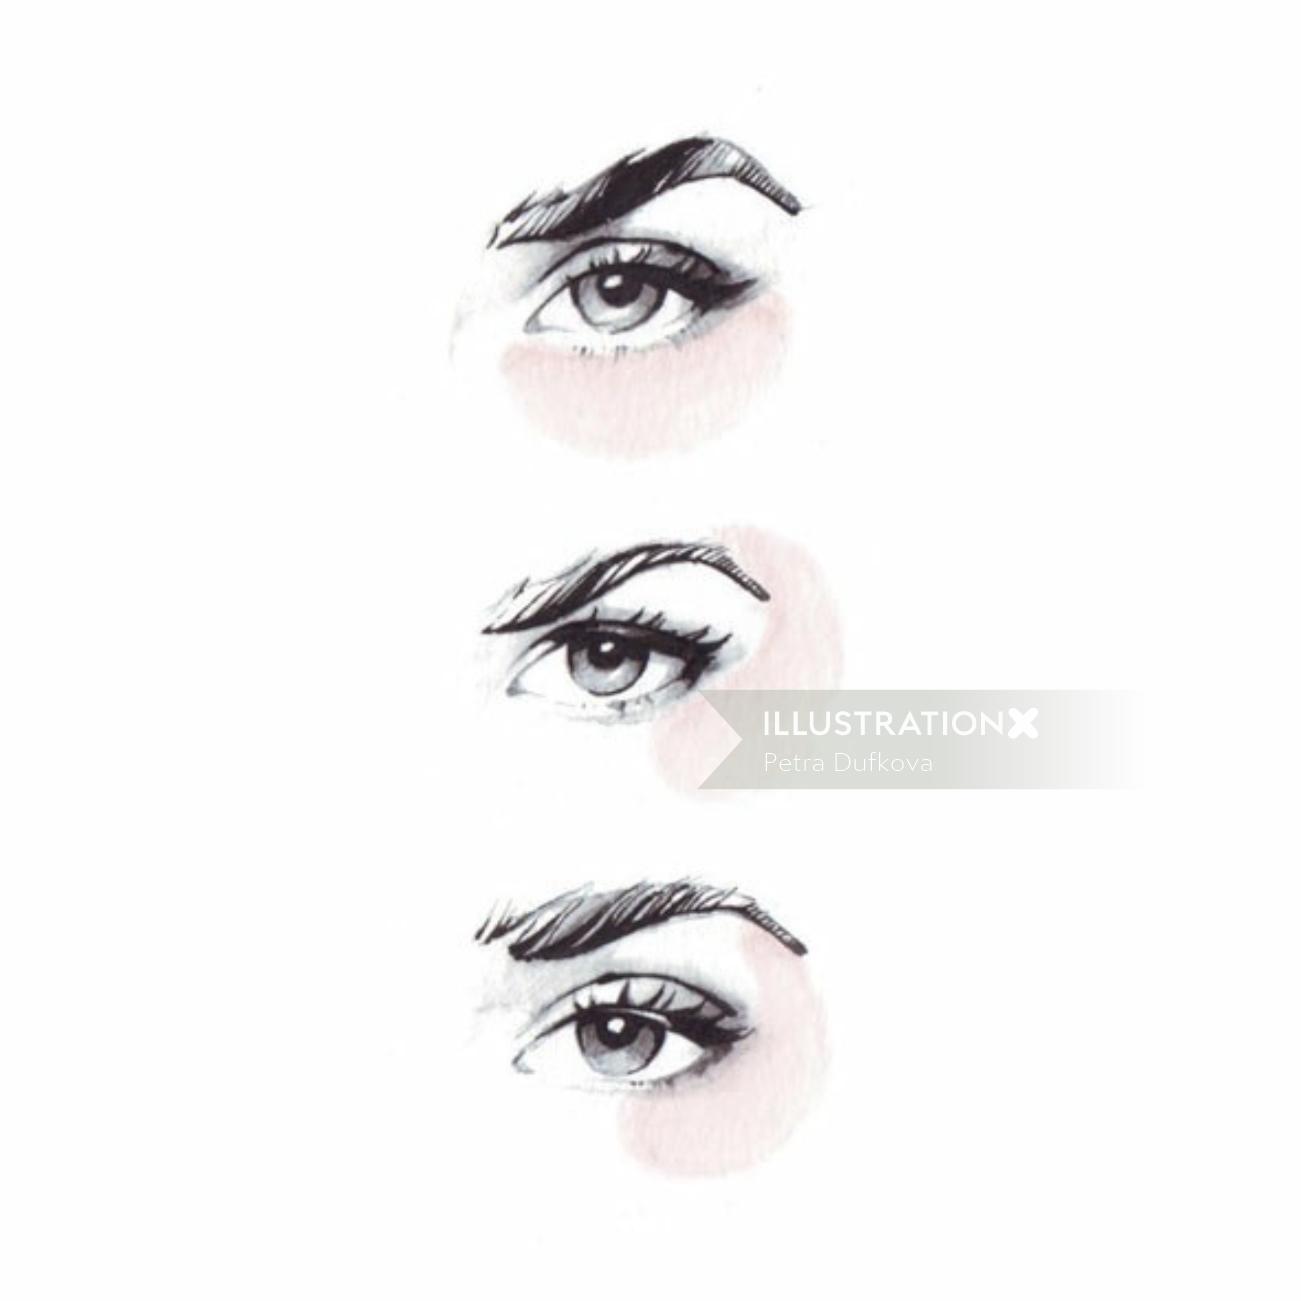 Beauty illustration of eyes
